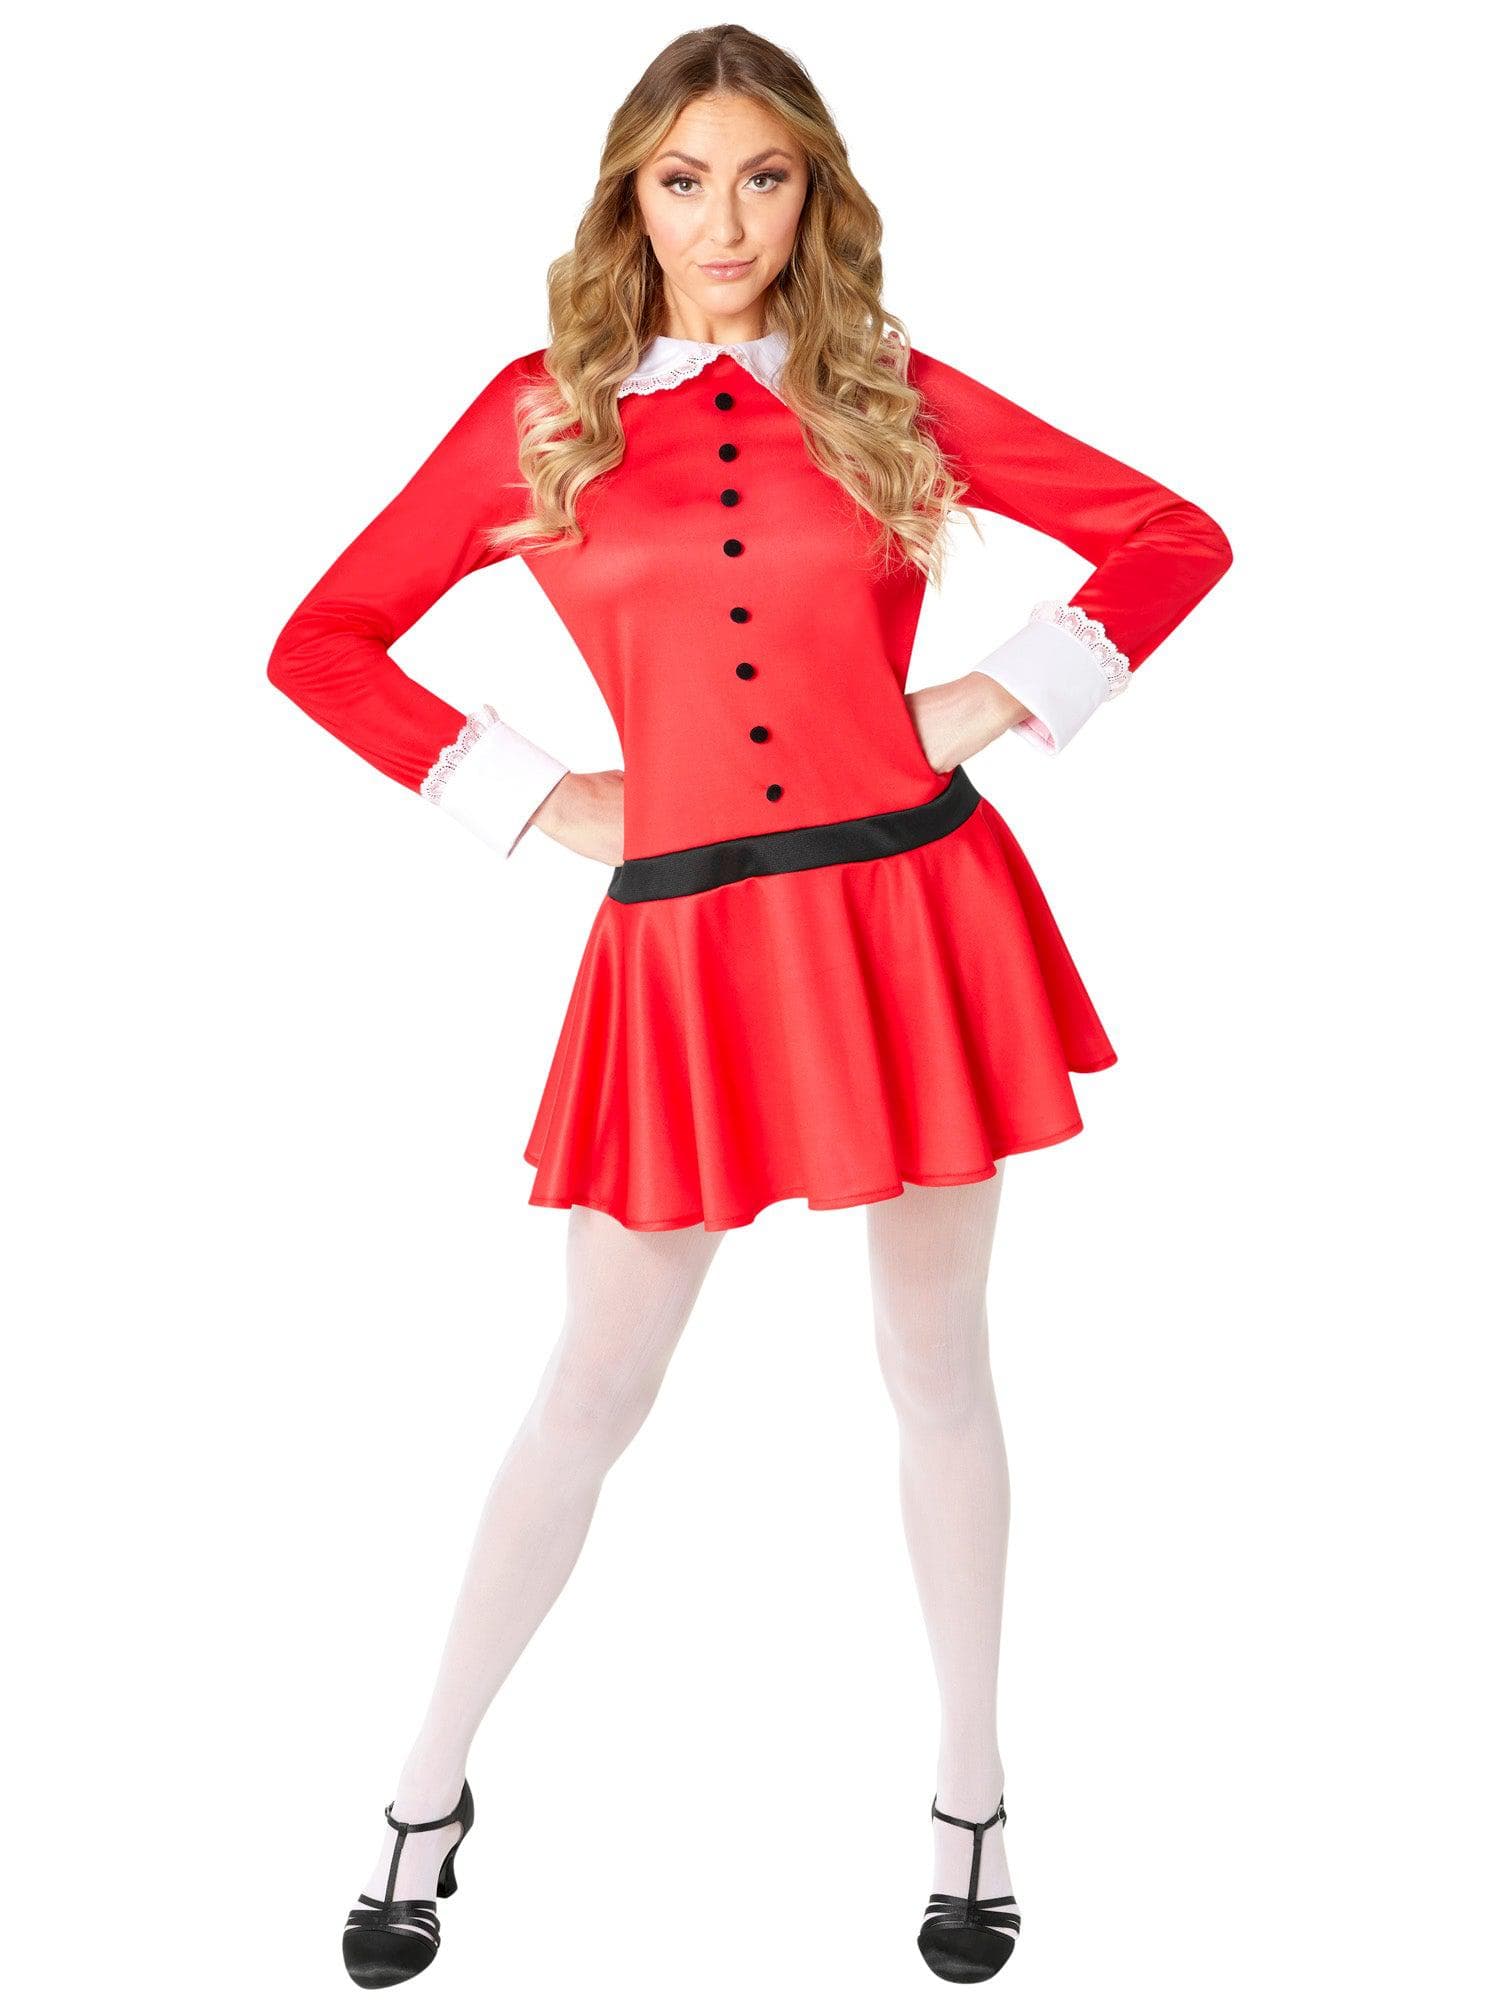 Willy Wonka Veruca Salt Adult Costume - costumes.com